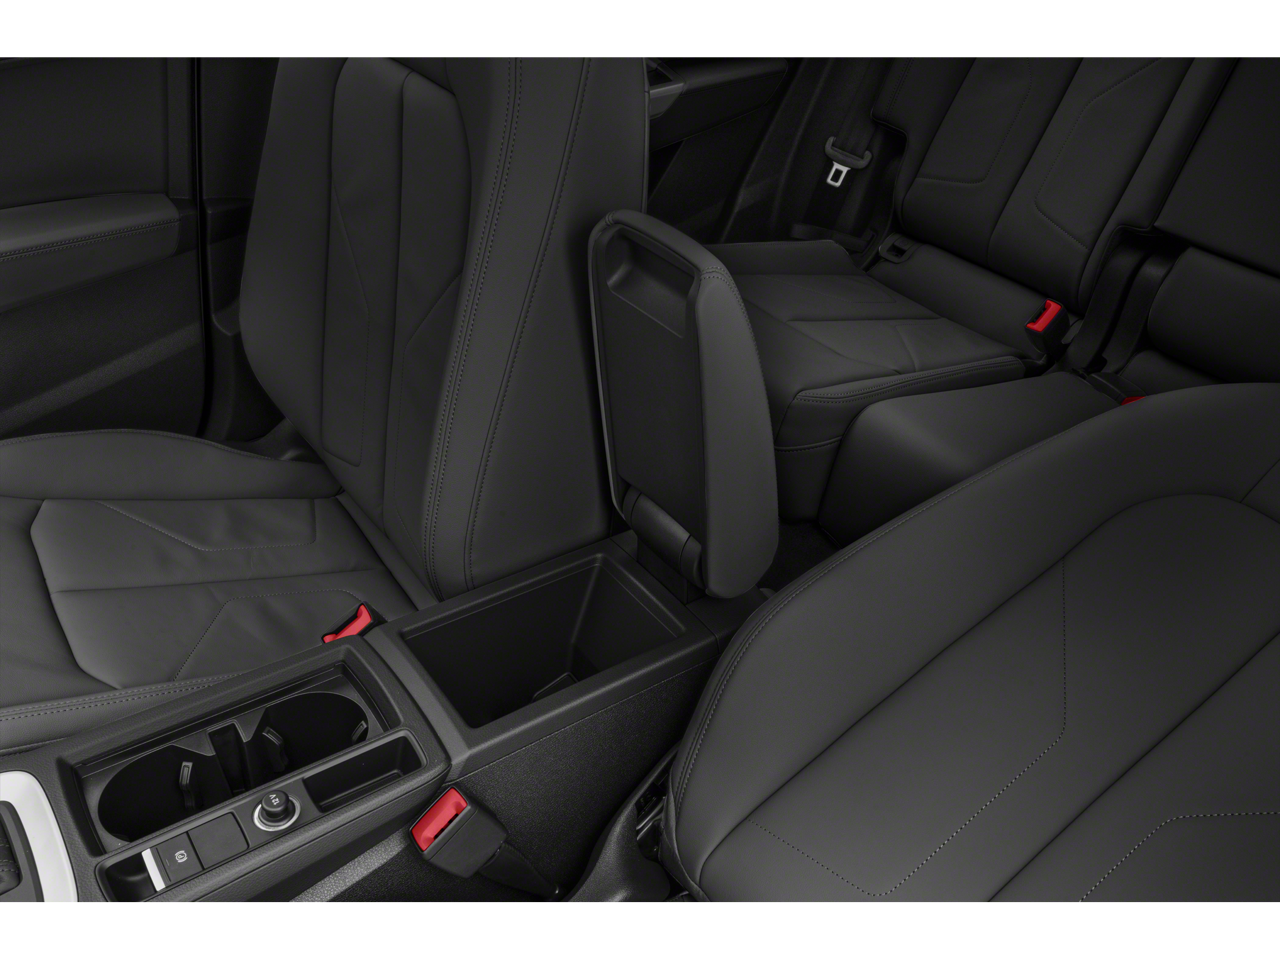 2020 Audi Q3 Premium S line quattro/PANO ROOF/CARPLAY/BLINDSPOT/WARRANTY